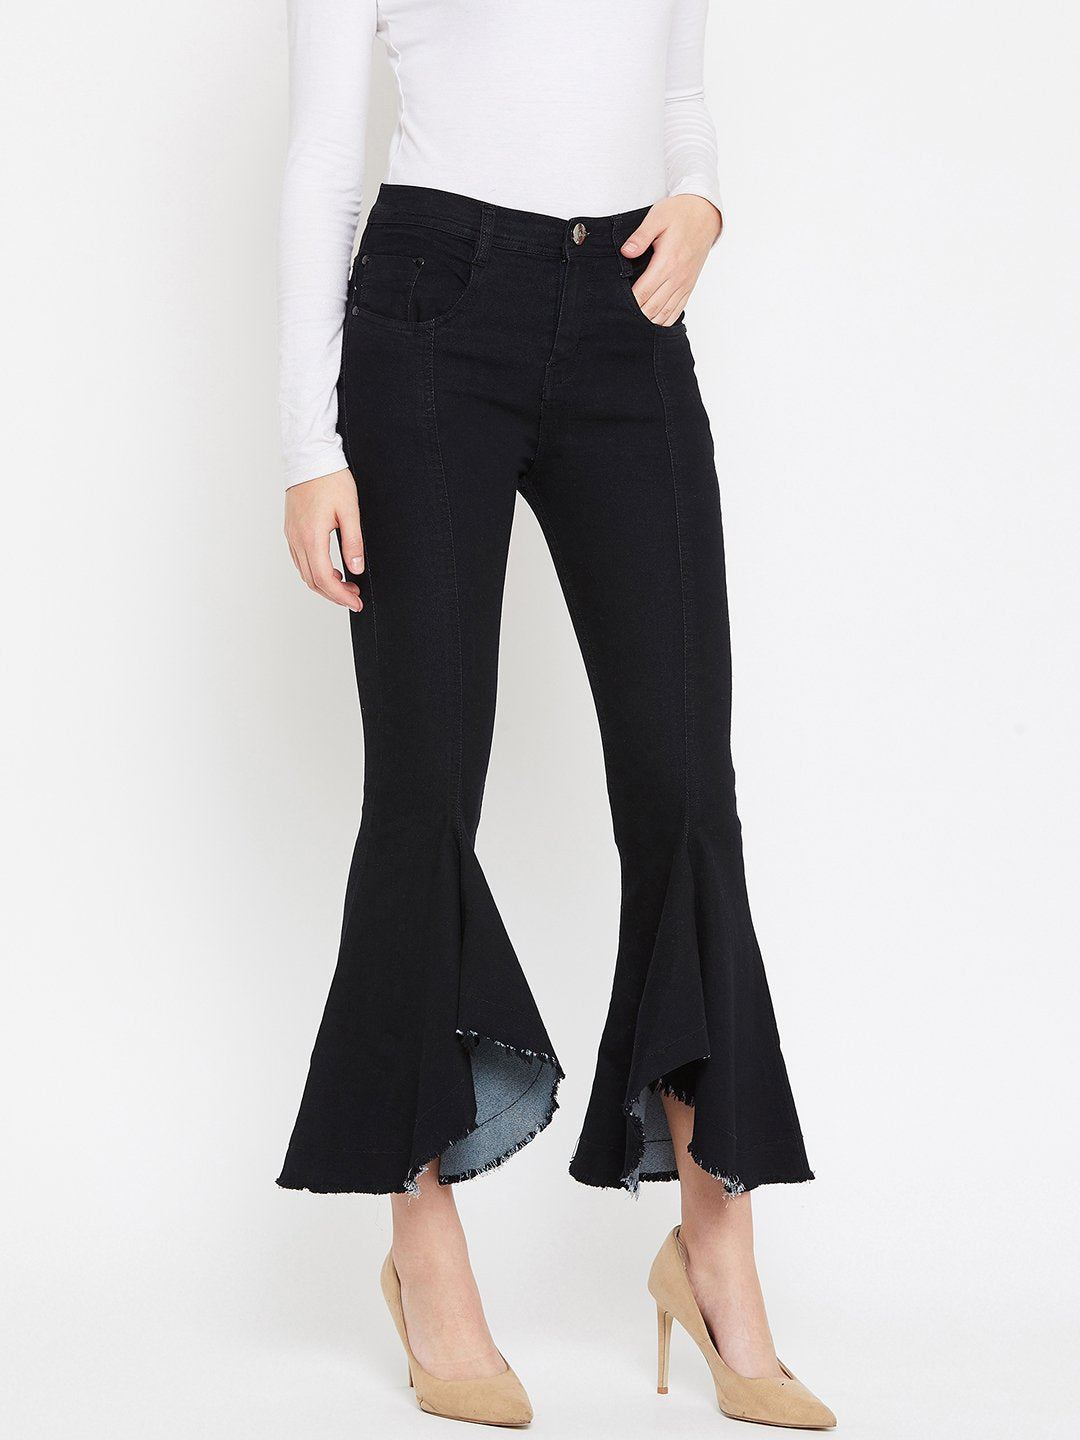 High Waist Flared Black Jeans - NiftyJeans